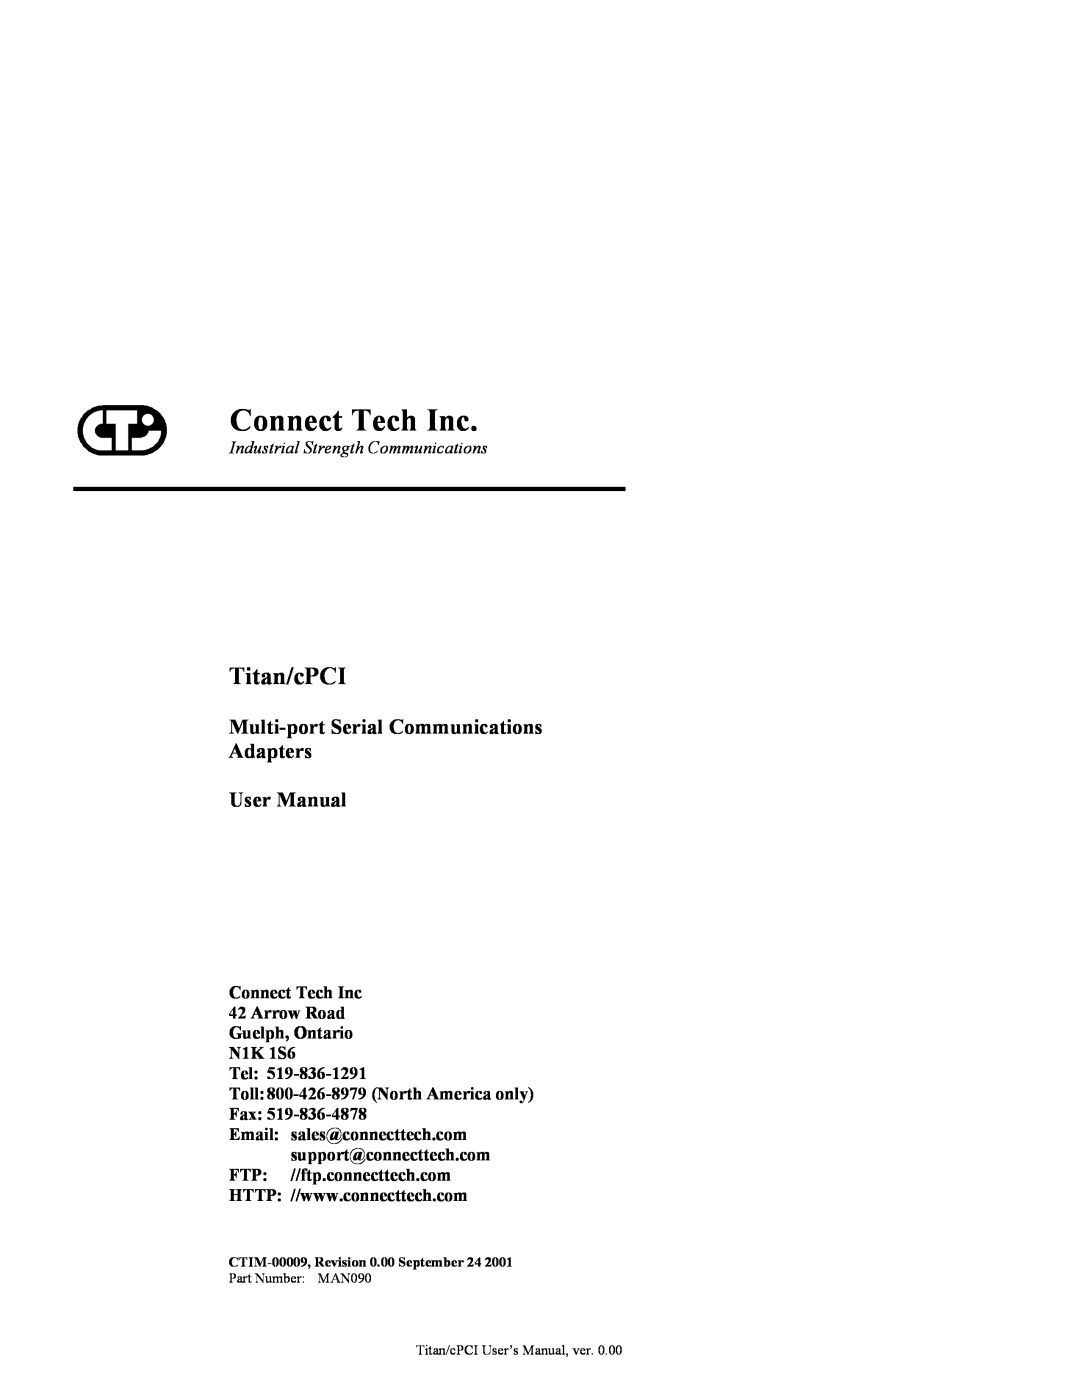 Connect Tech JB1 user manual Multi-port Serial Communications Adapters User Manual, FTP //ftp.connecttech.com, Titan/cPCI 